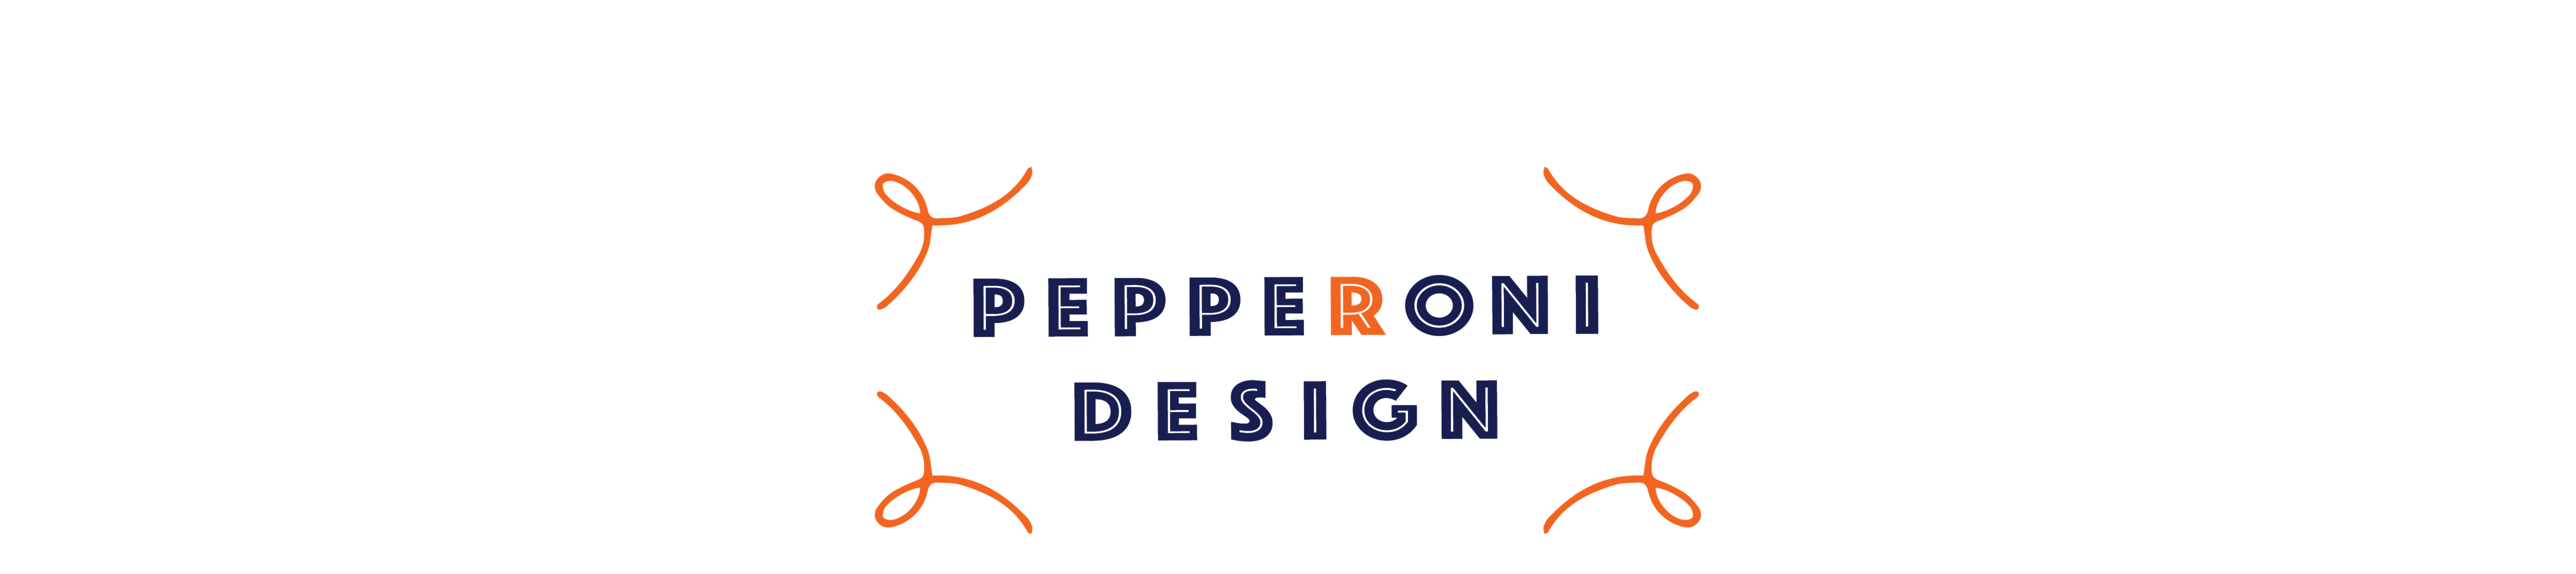 Pepperoni Design